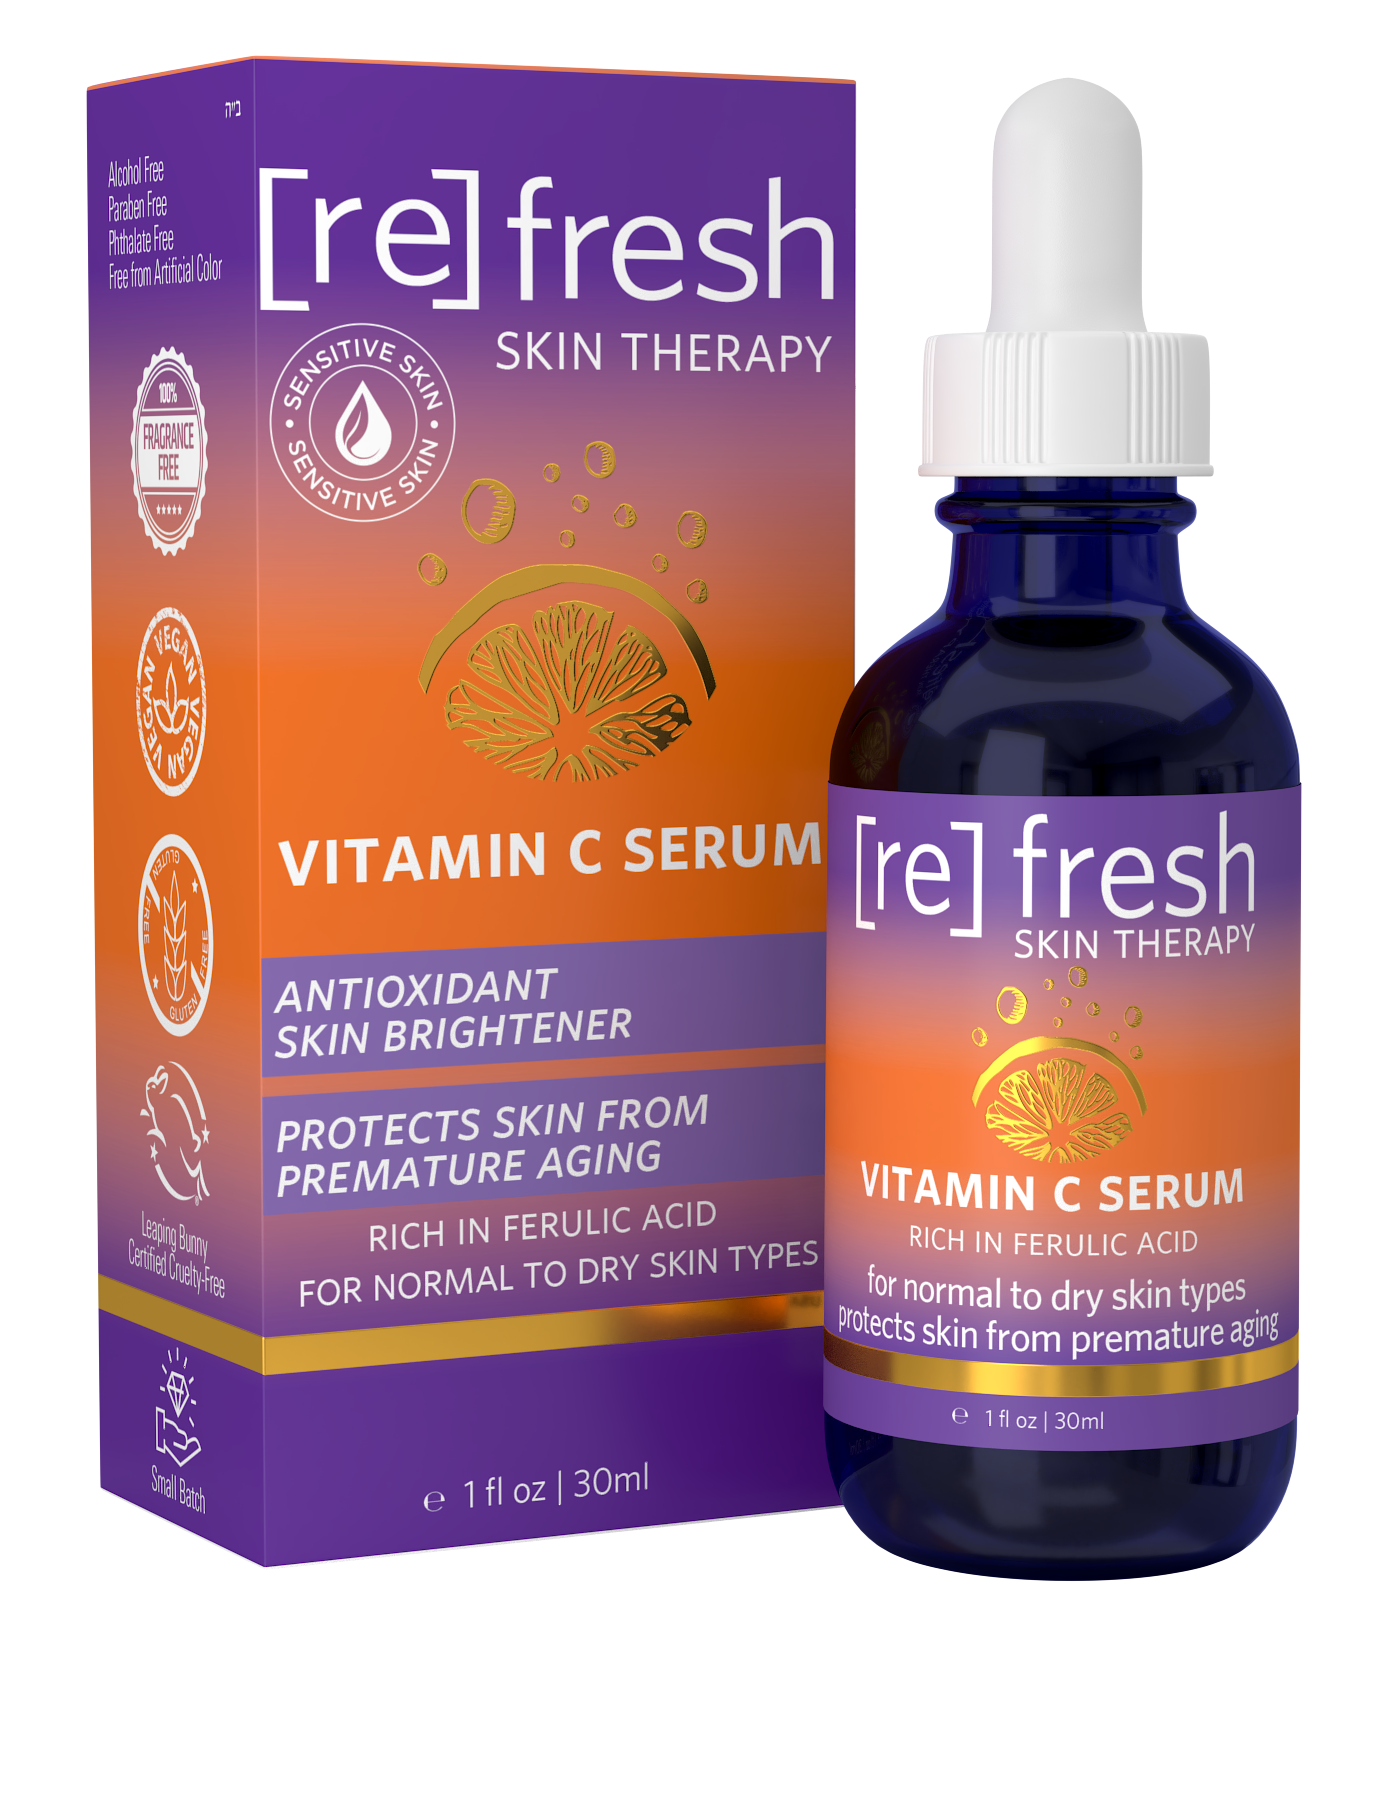 Refresh Skin Therapy Vitamin C Serum Bottle and Box at Costco